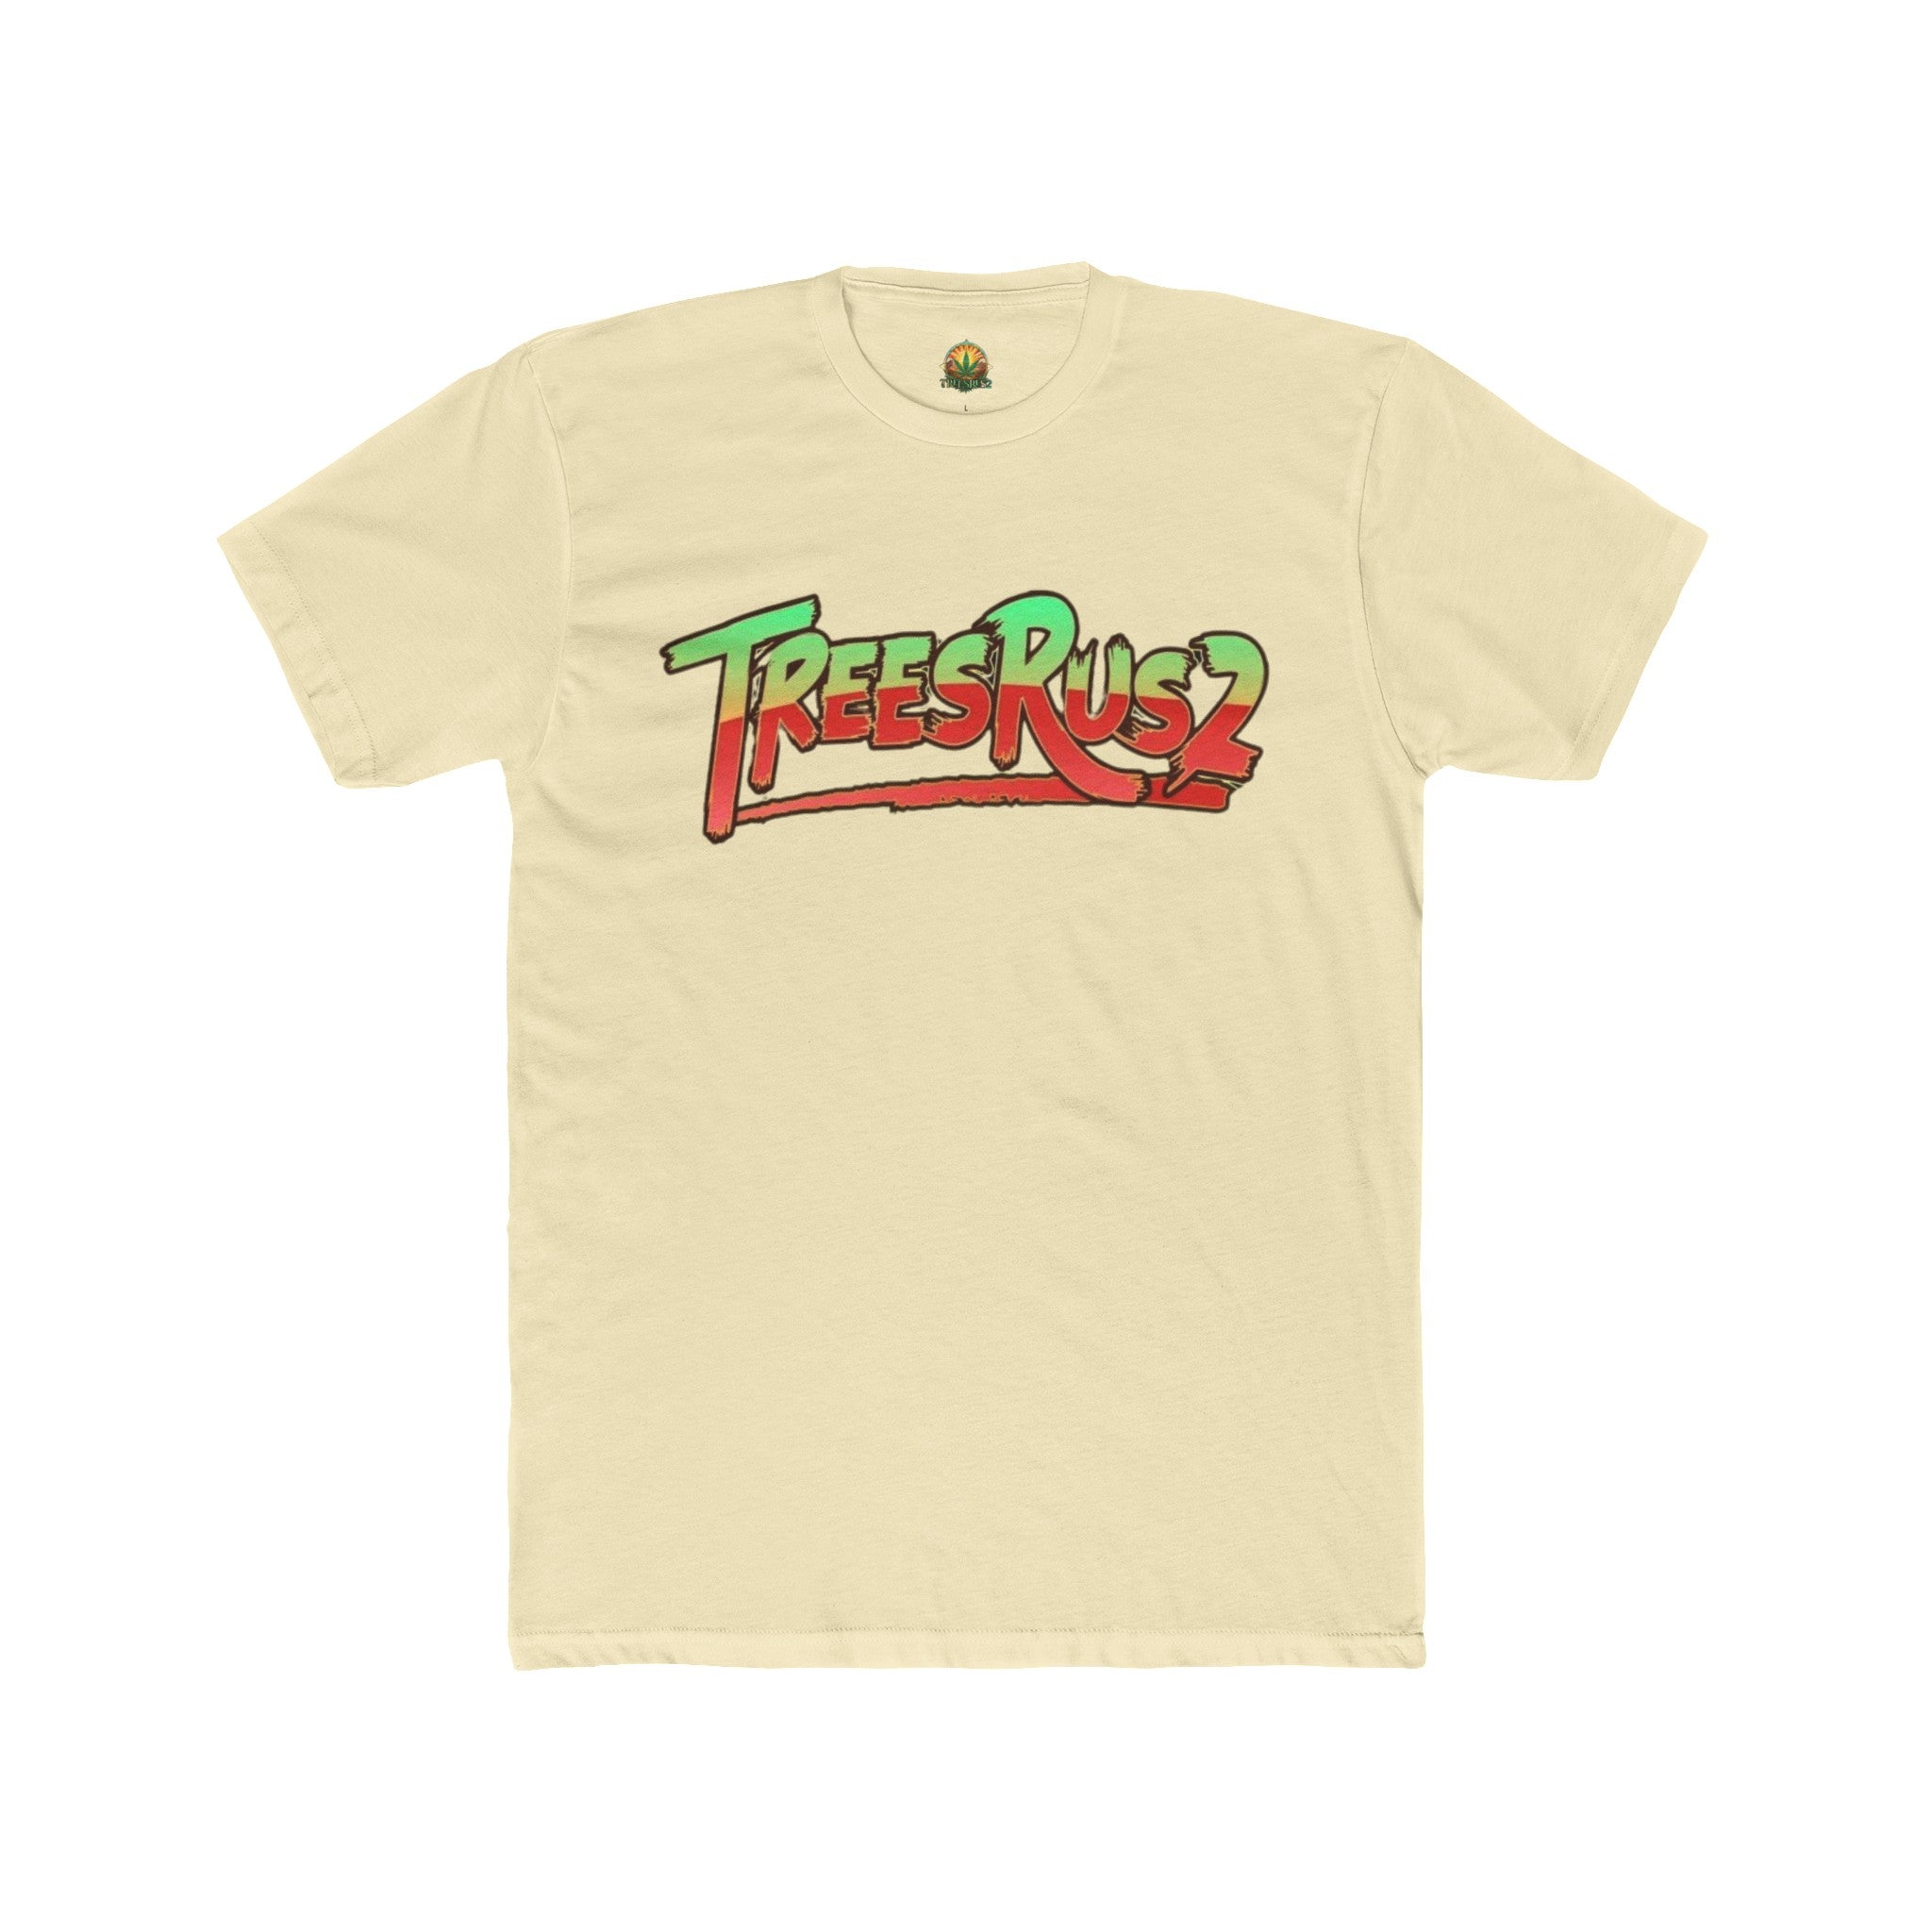 Stacked logo Tee - TreesRus2 Clothing